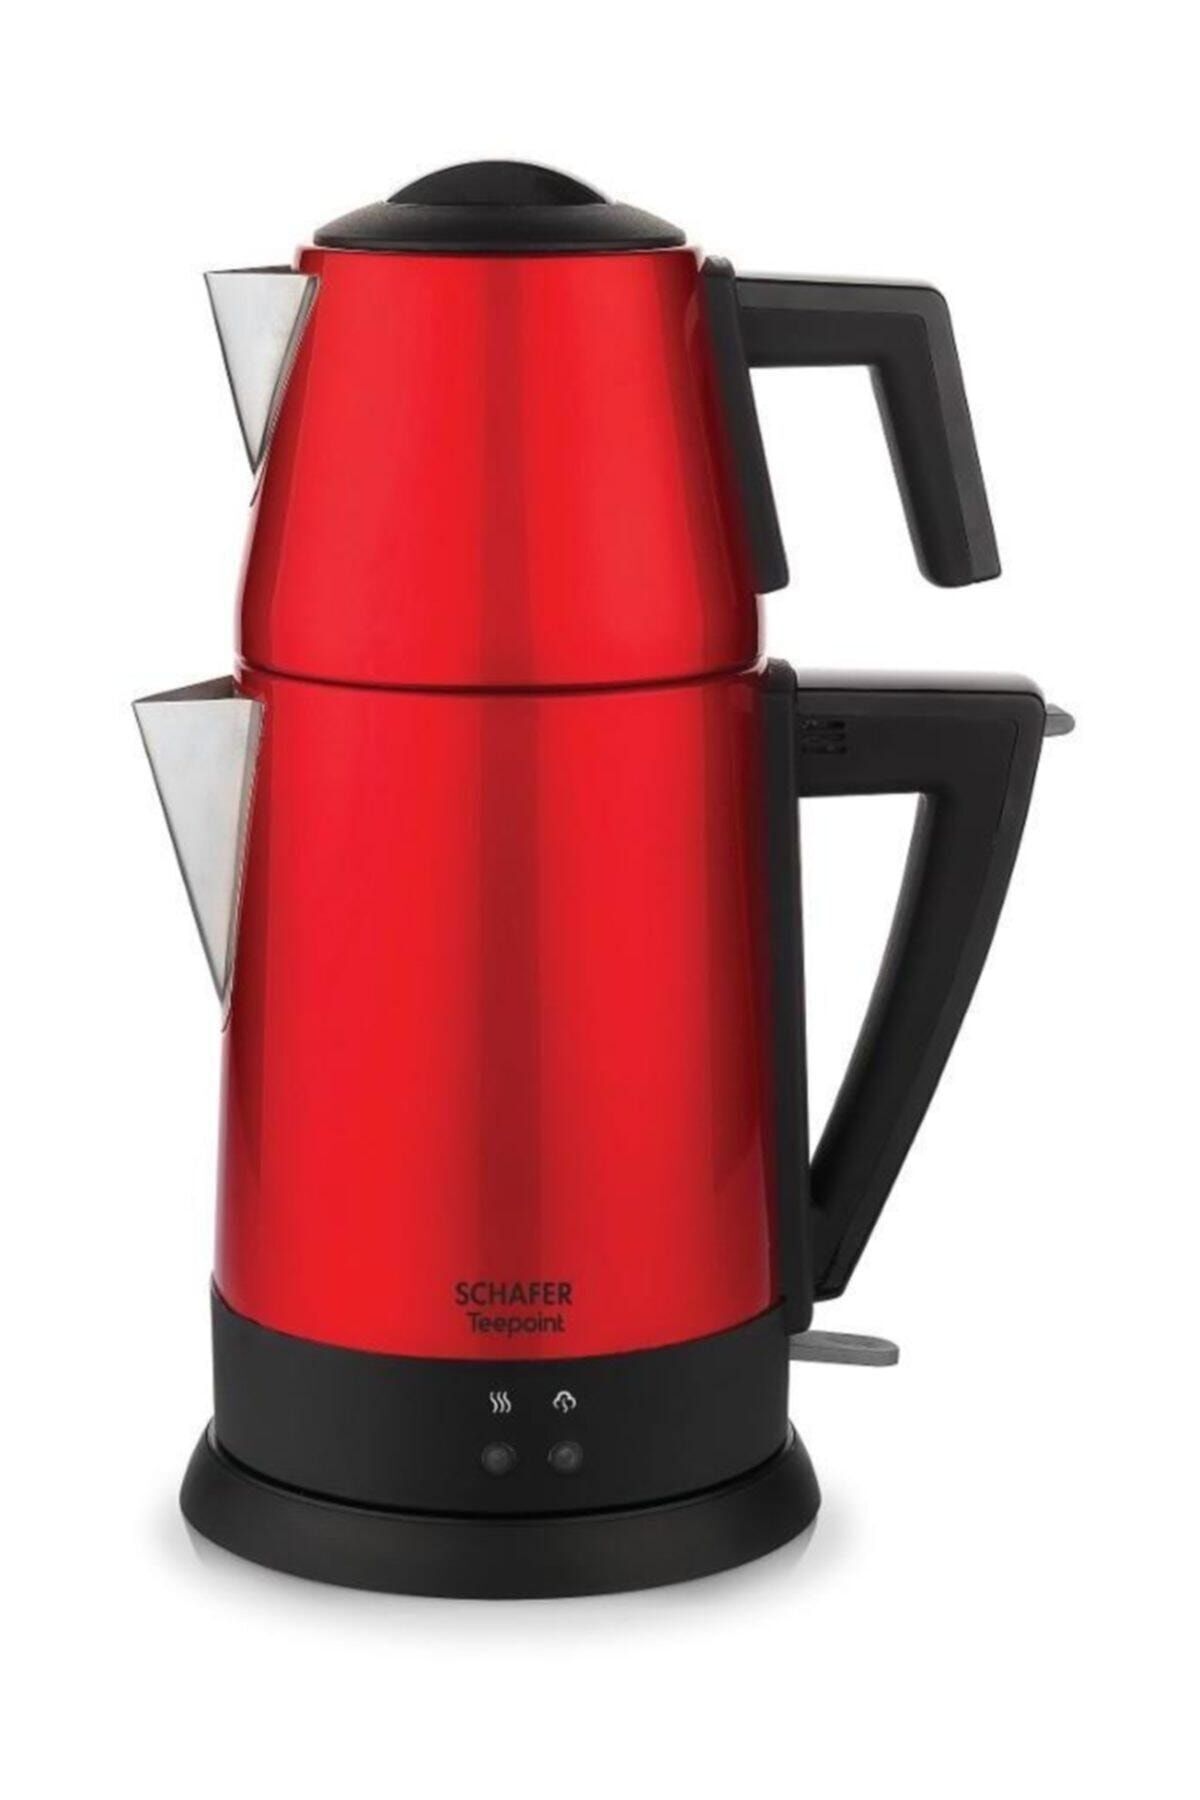 Schafer Teepoint Elektrikli Çay Makinesi Kırmızı Kmz01